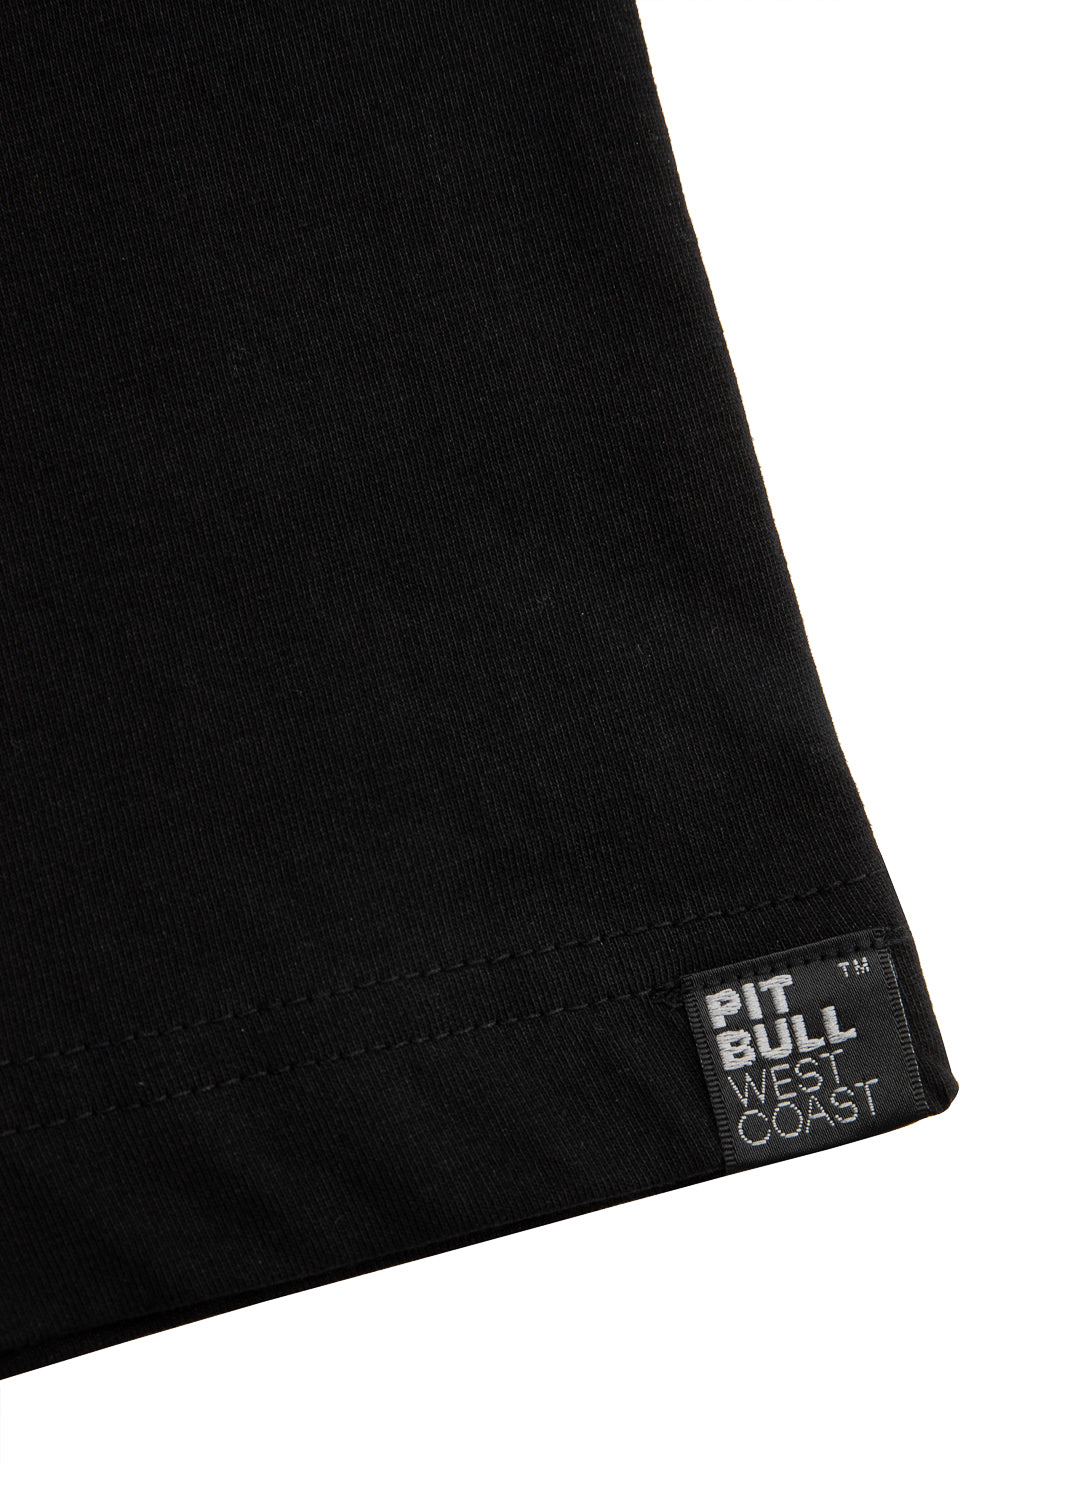 PITBULL R Black T-shirt